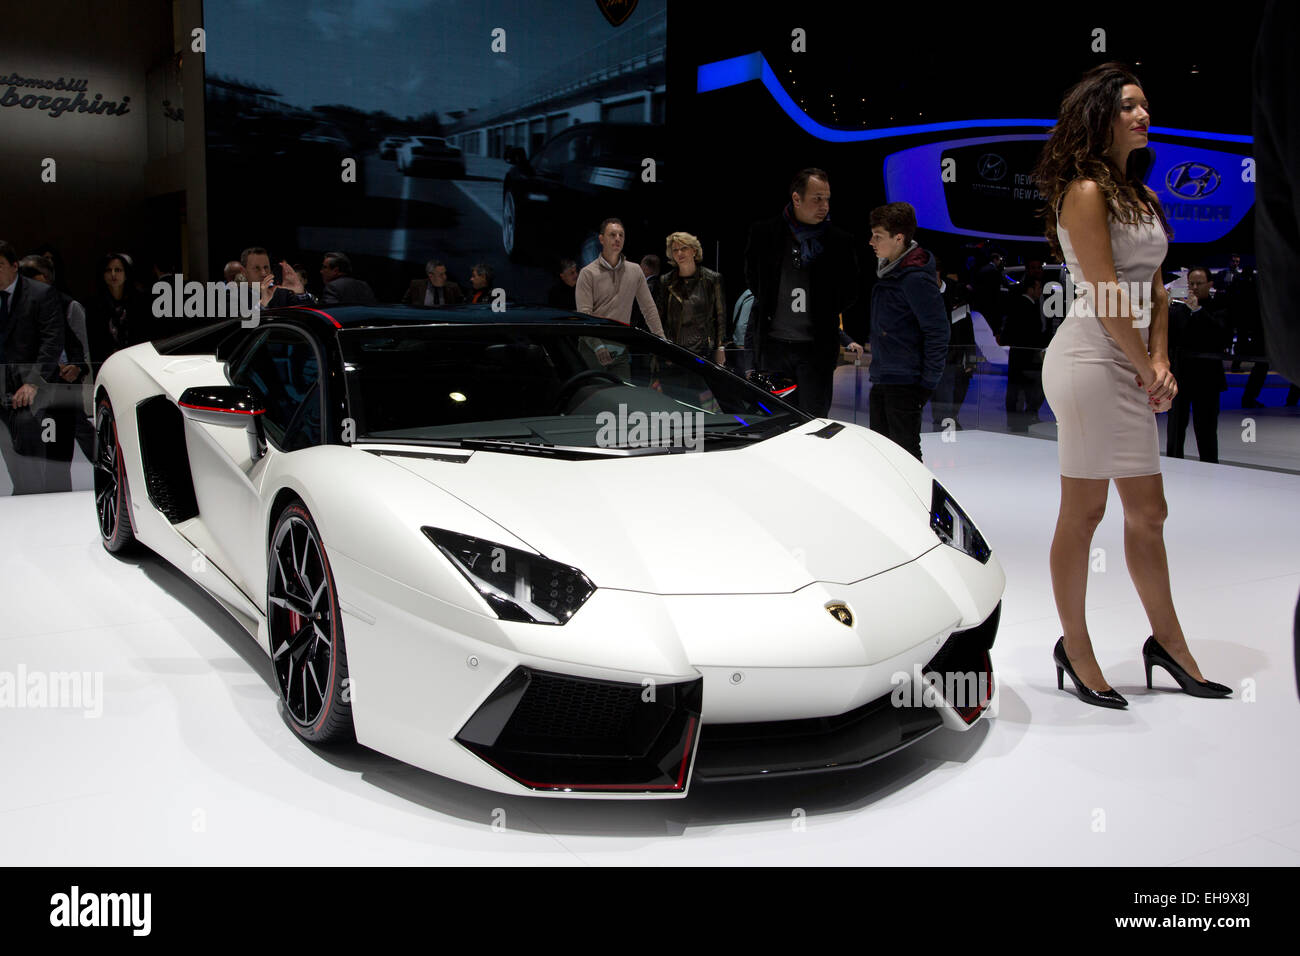 Lamborghini Aventador Pirelli Edition at the Geneva motor show 2015 Stock Photo